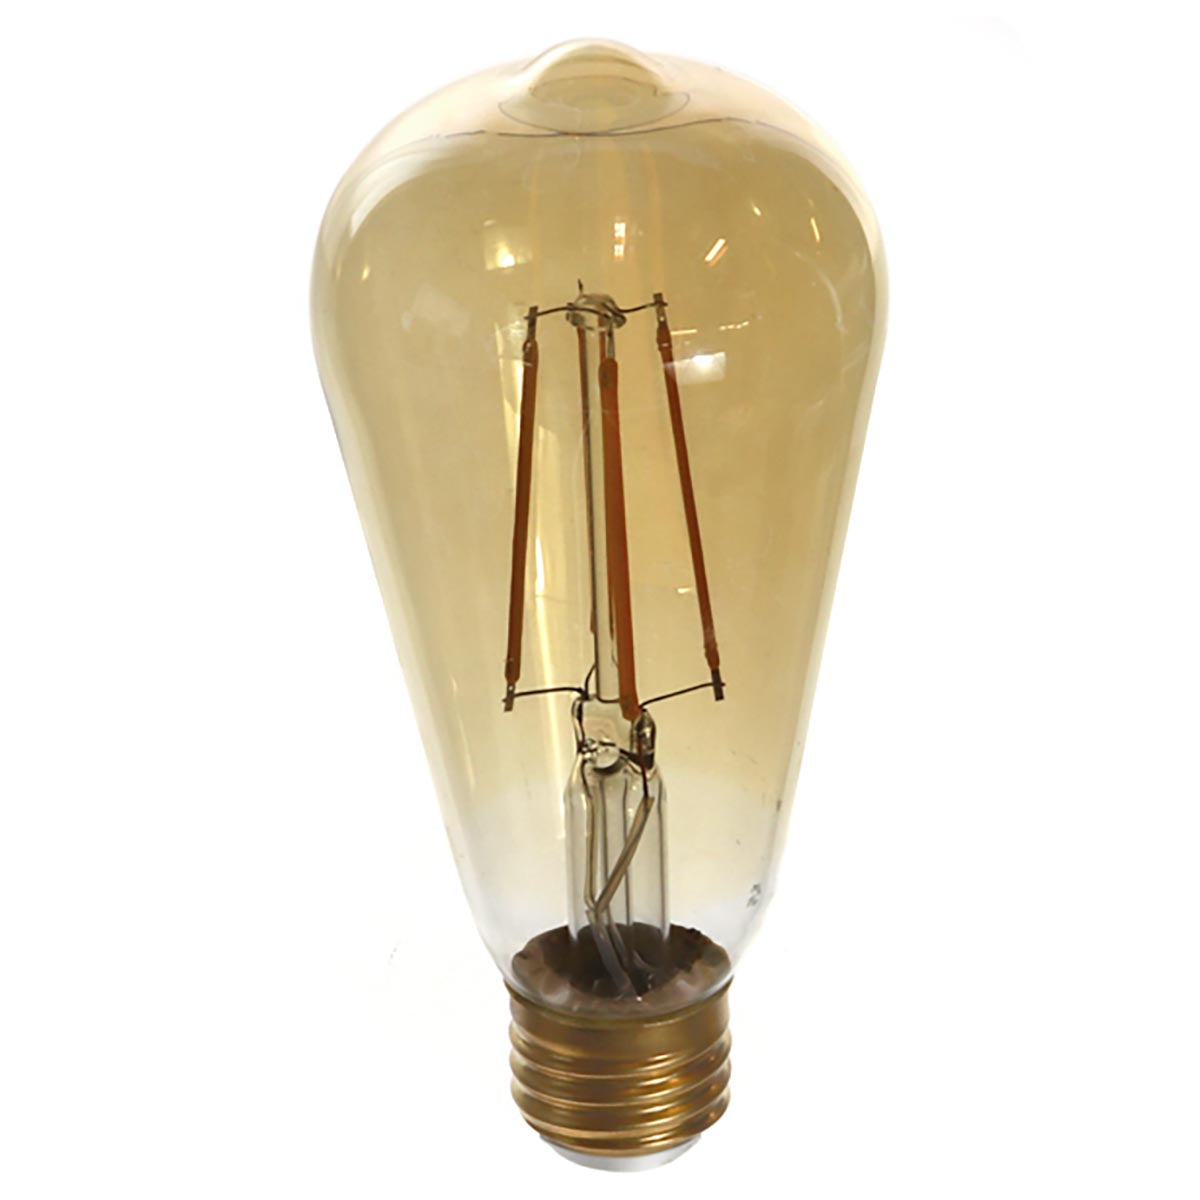 Progress Canada - Light Bulb - LED Lamps- Union Lighting Luminaires Decor